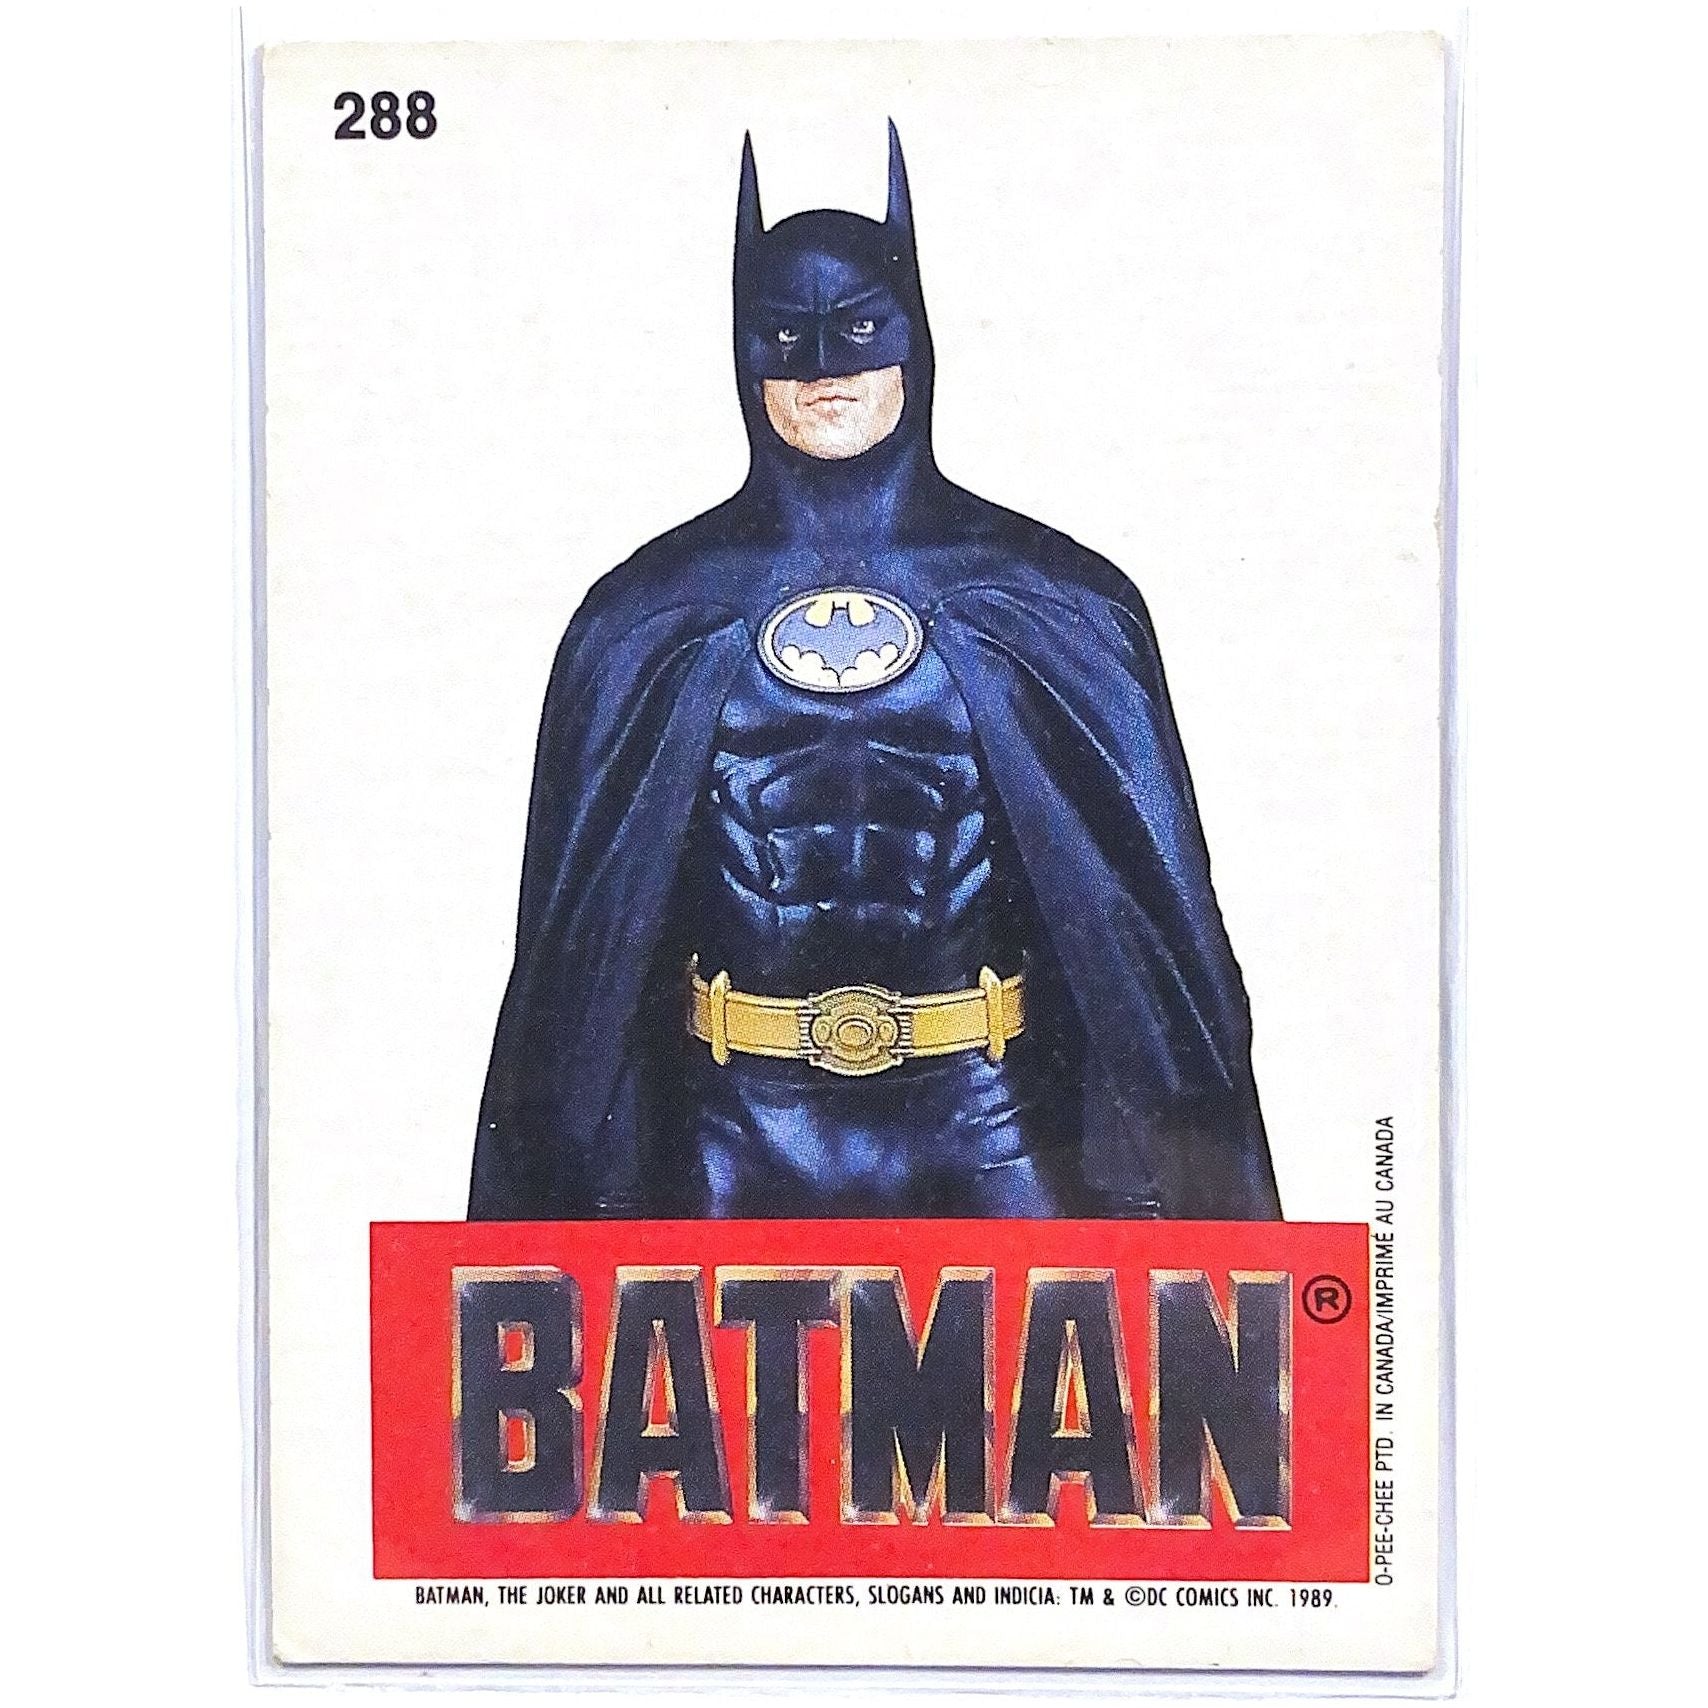  1989 O-Pee-Chee DC Comics Batman Puzzle Back #288  Local Legends Cards & Collectibles